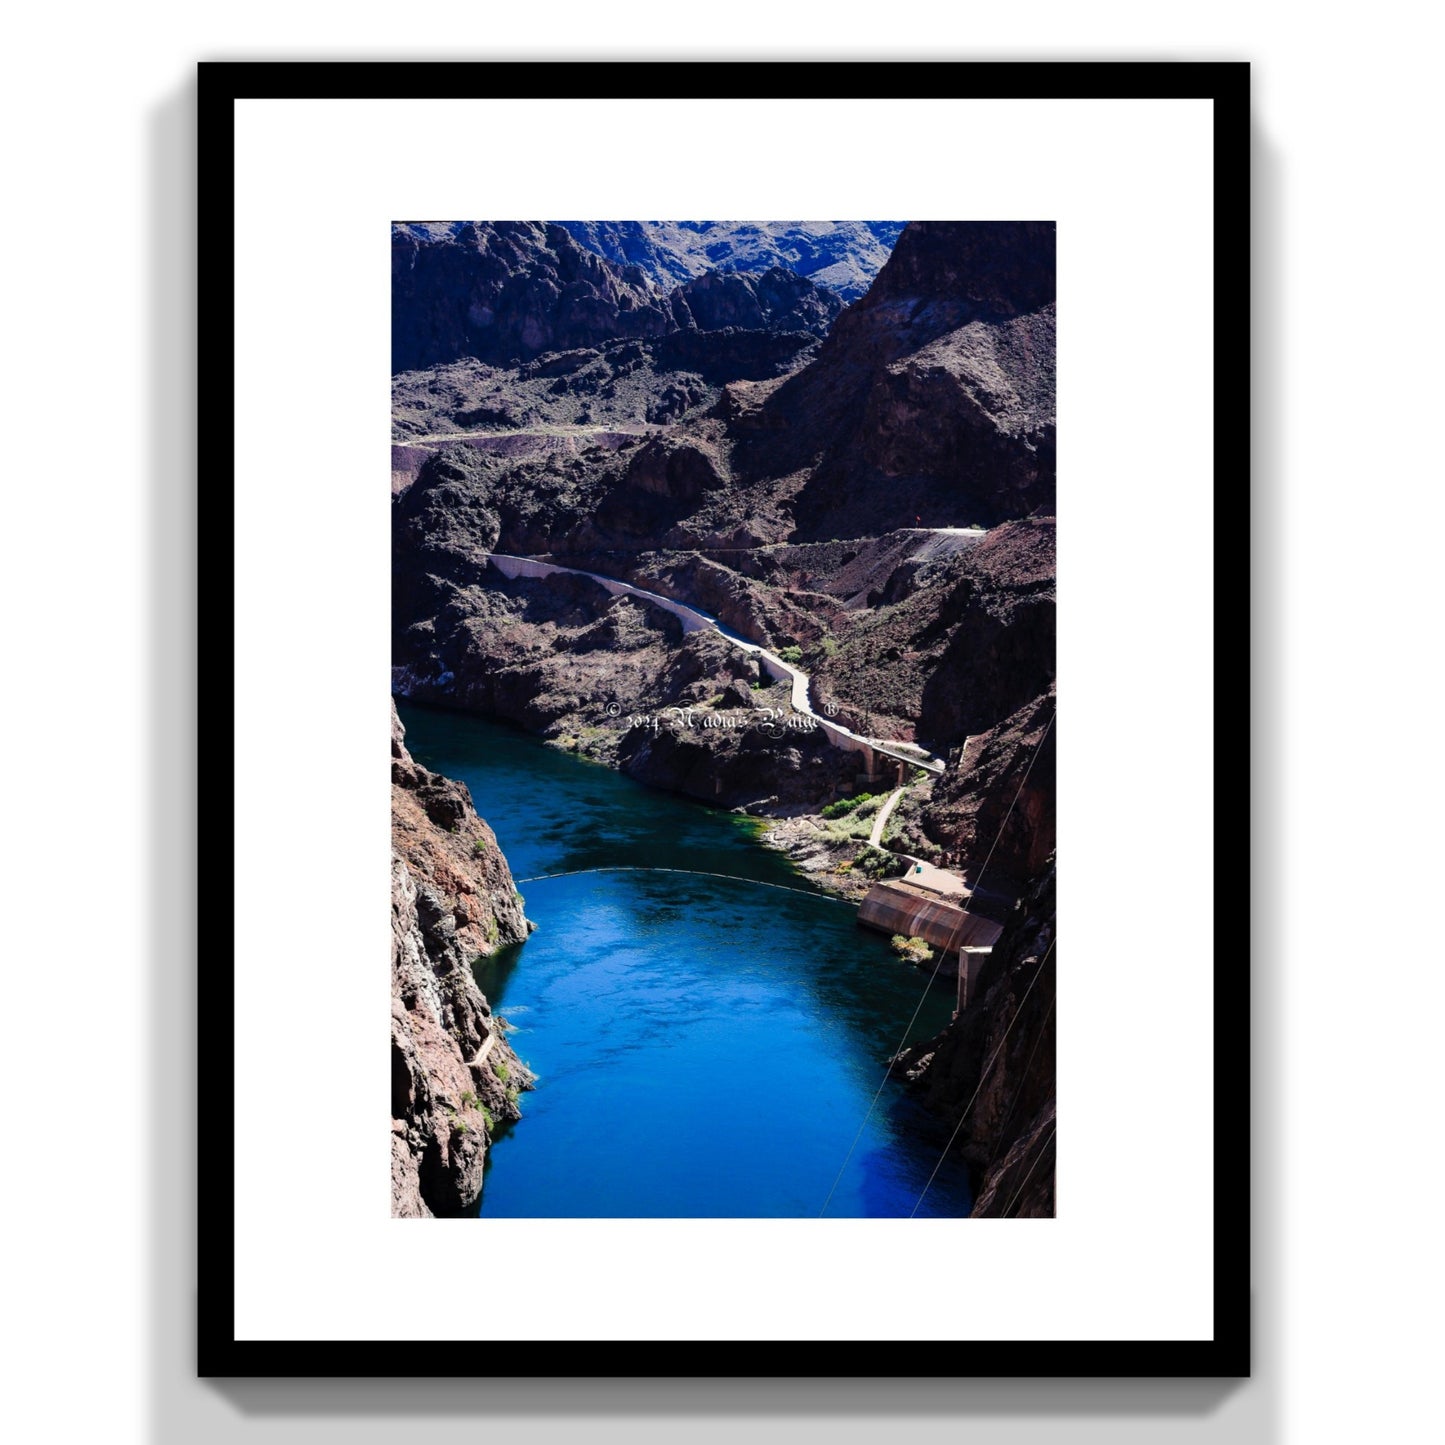 Hoover Dam Image 4